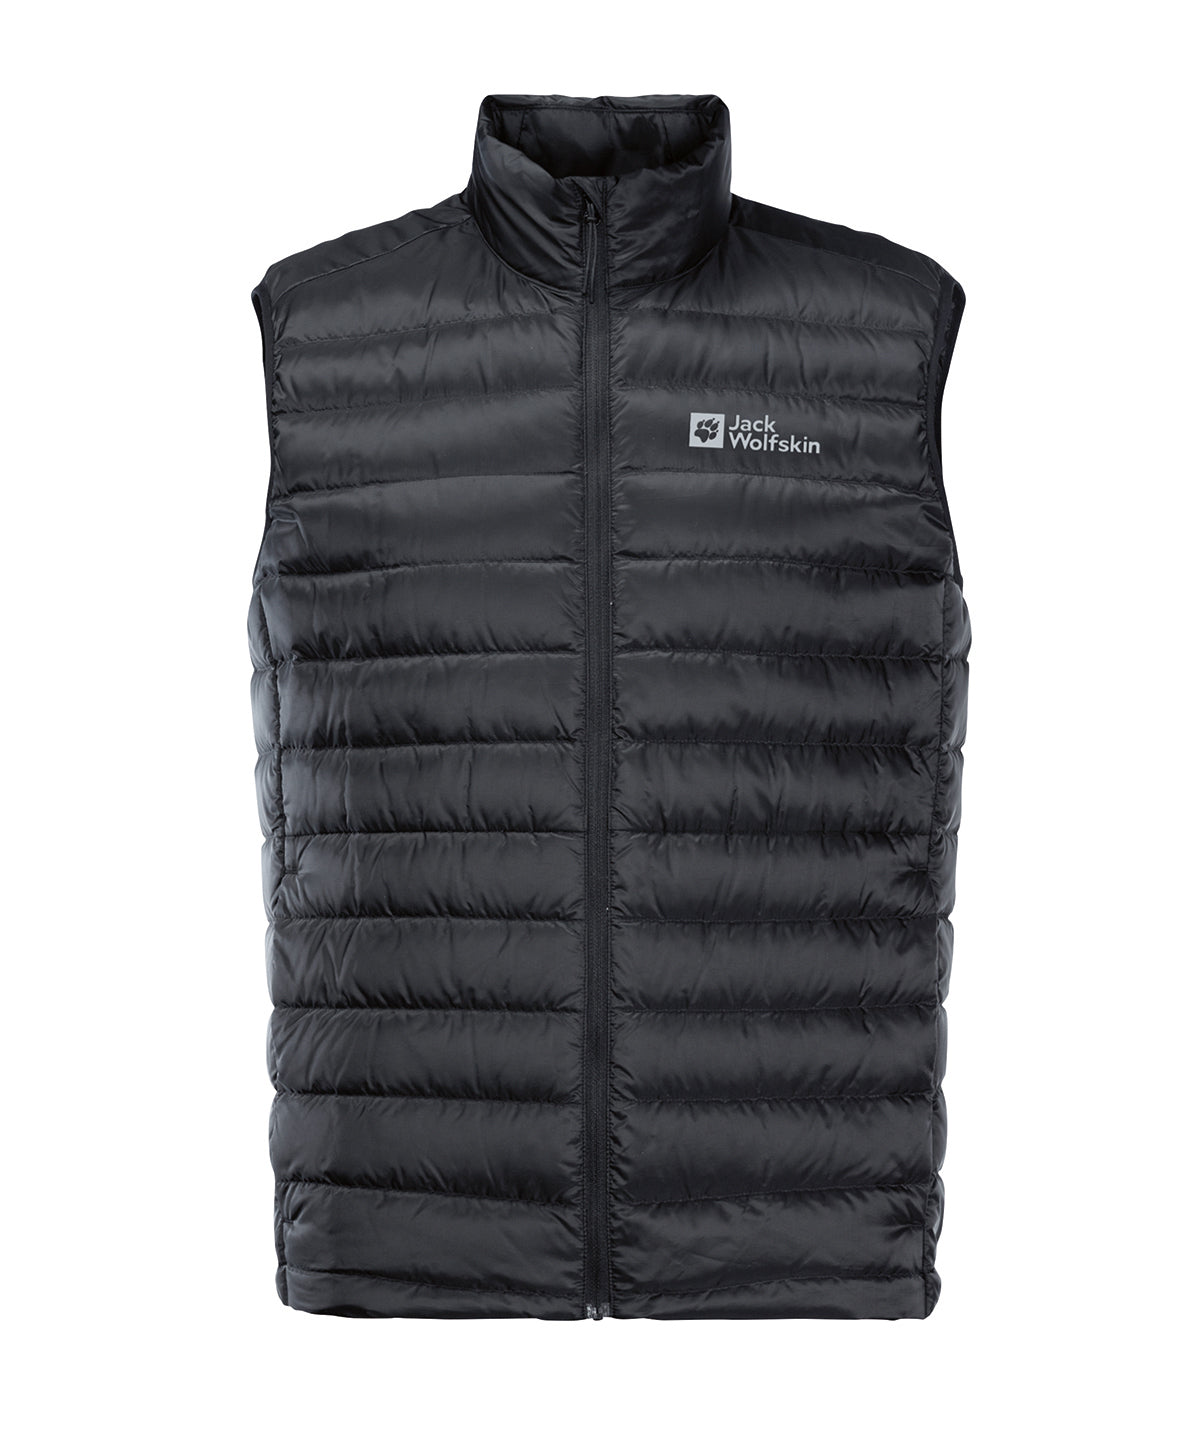 Jack Wolfskin Packable padded vest